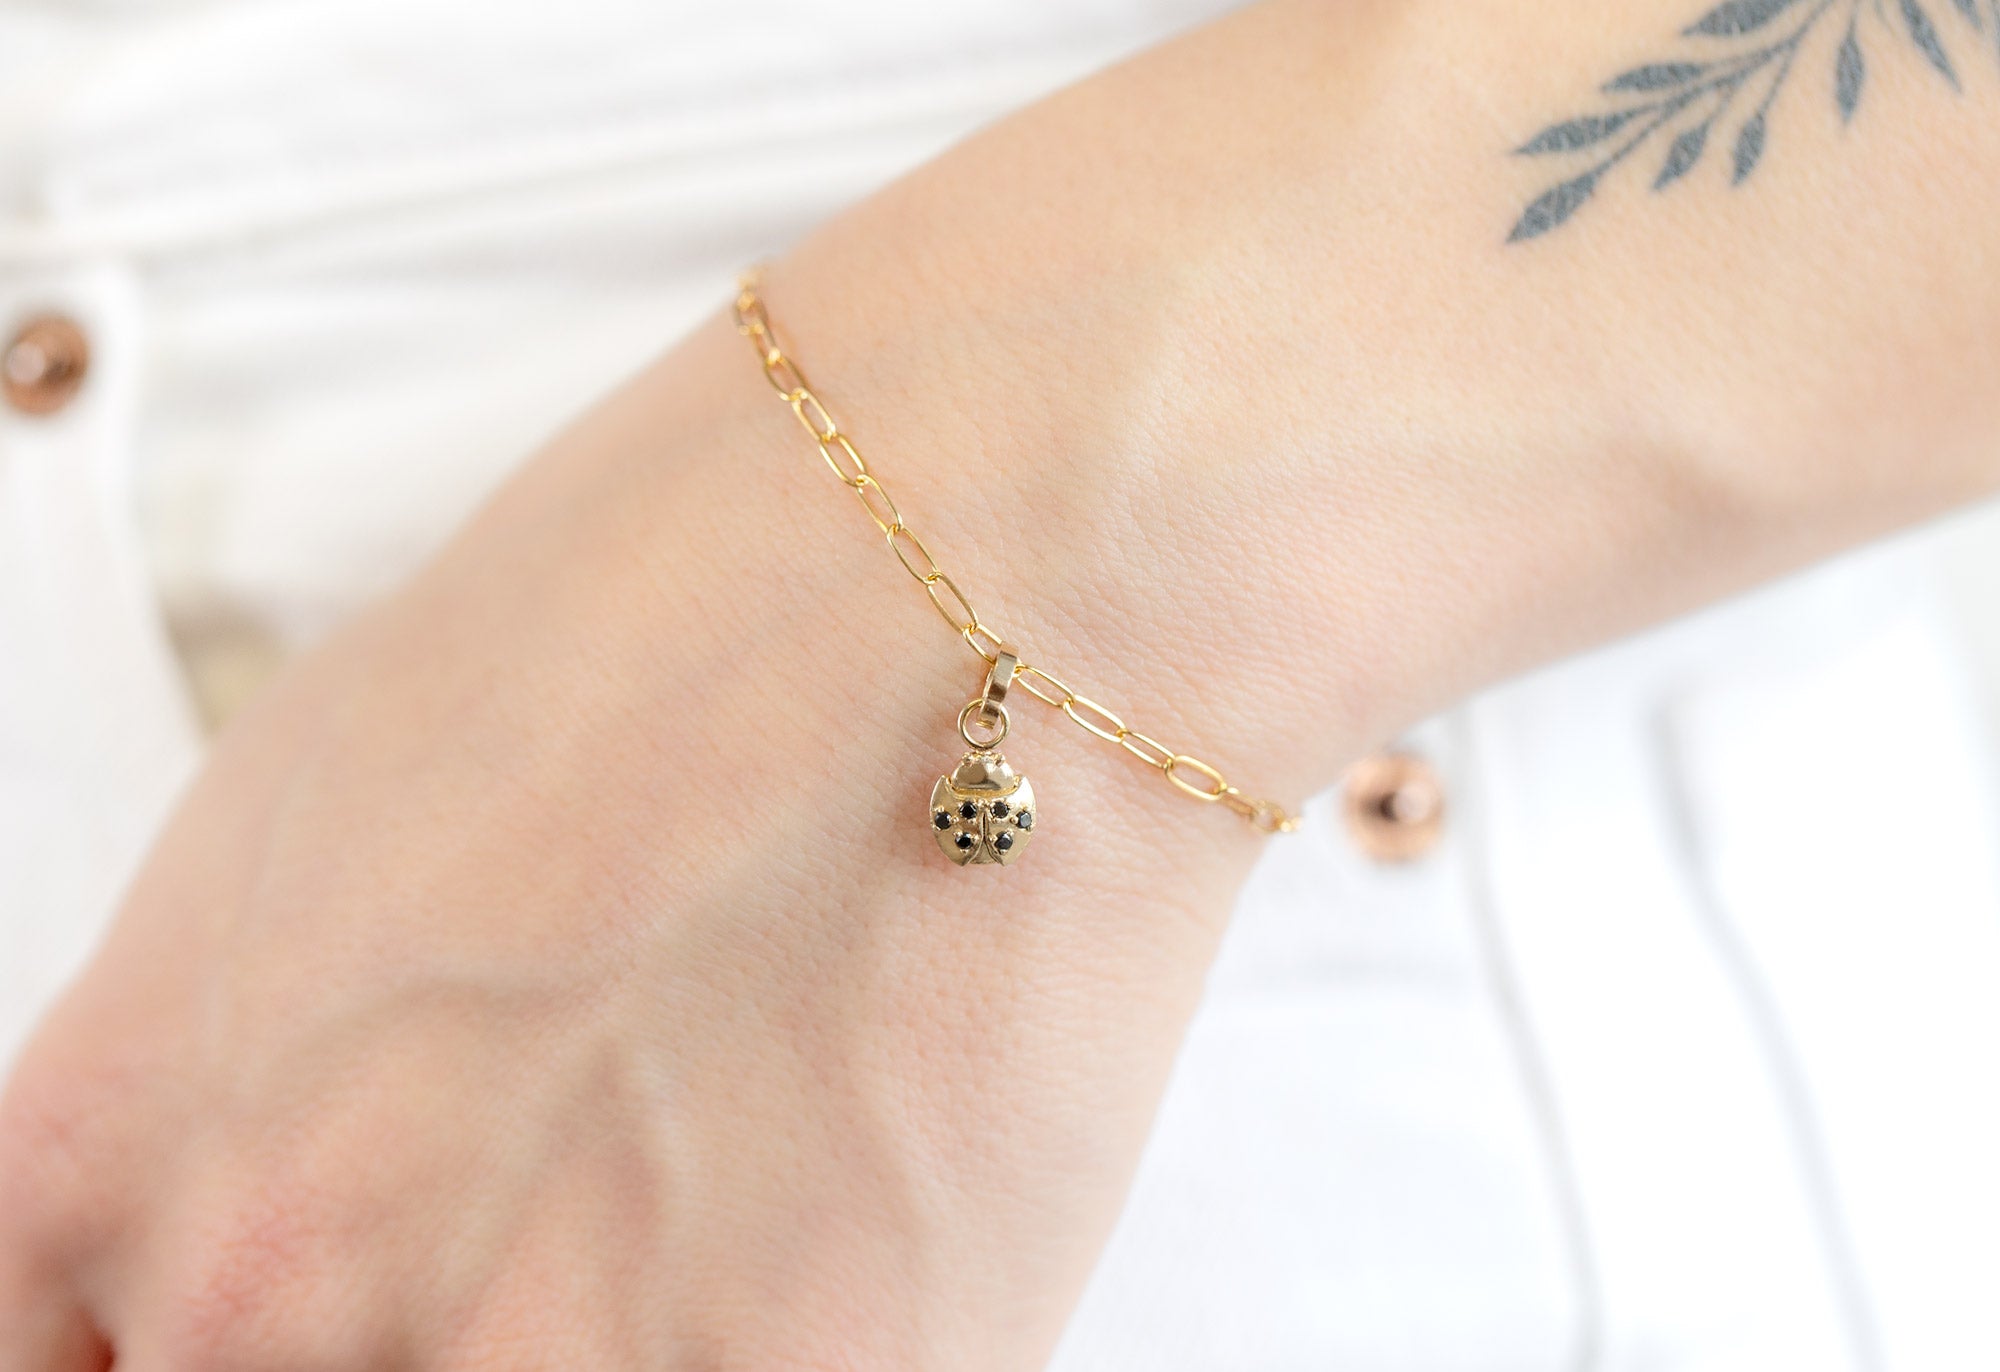 10k Yellow Gold Ladybug Charm on Bracelet Chain on Model